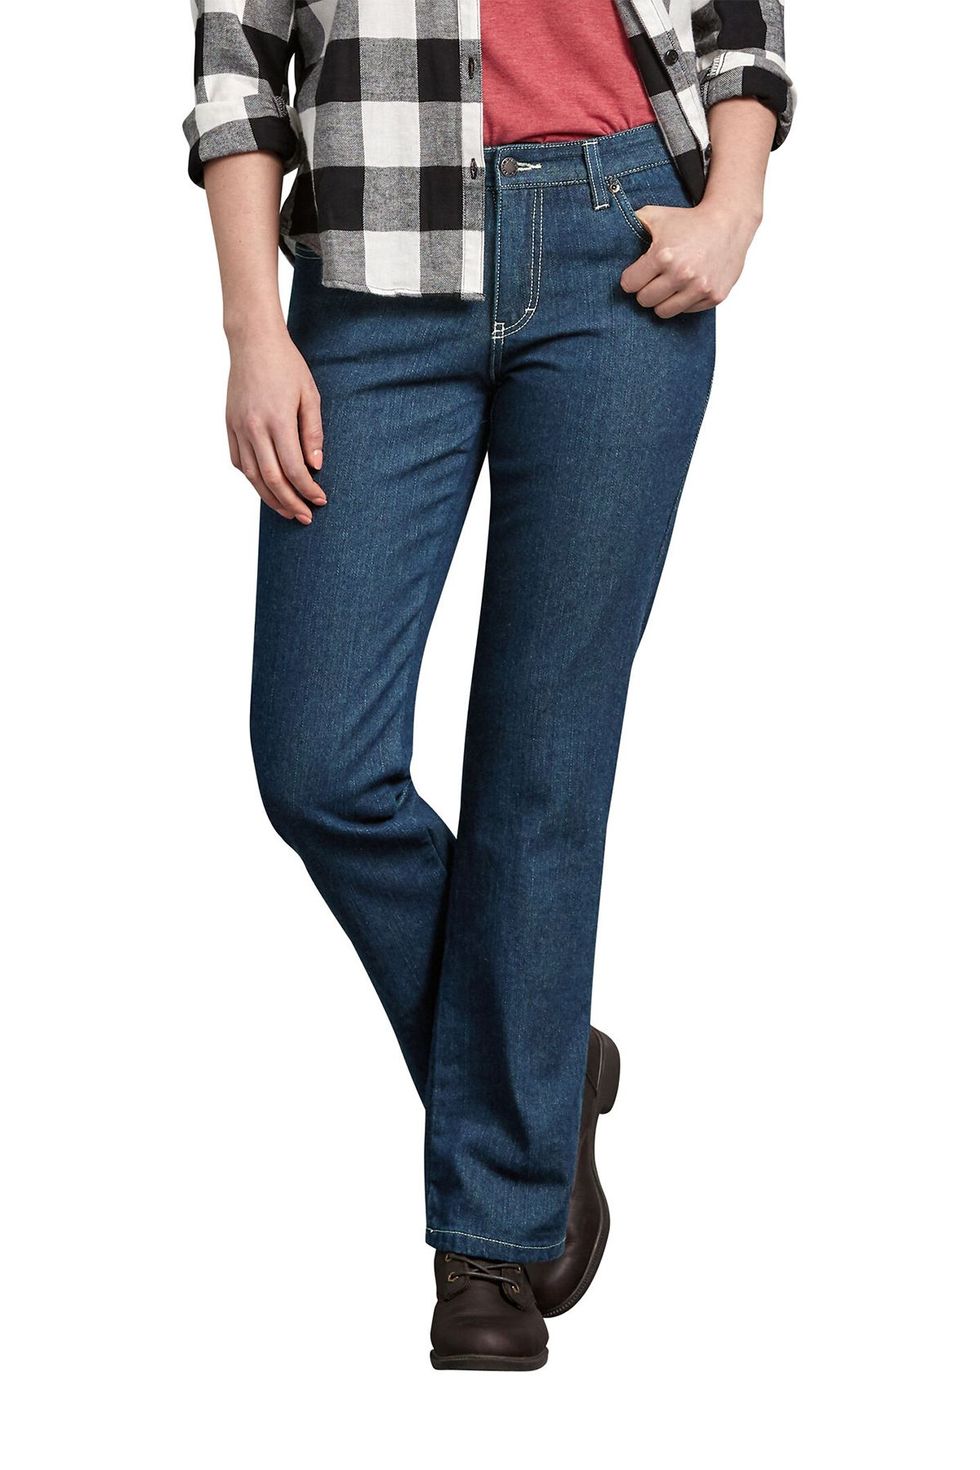 Women's Signature Lined Boyfriend Jeans, Low-Rise Straight-Leg Flannel-Lined